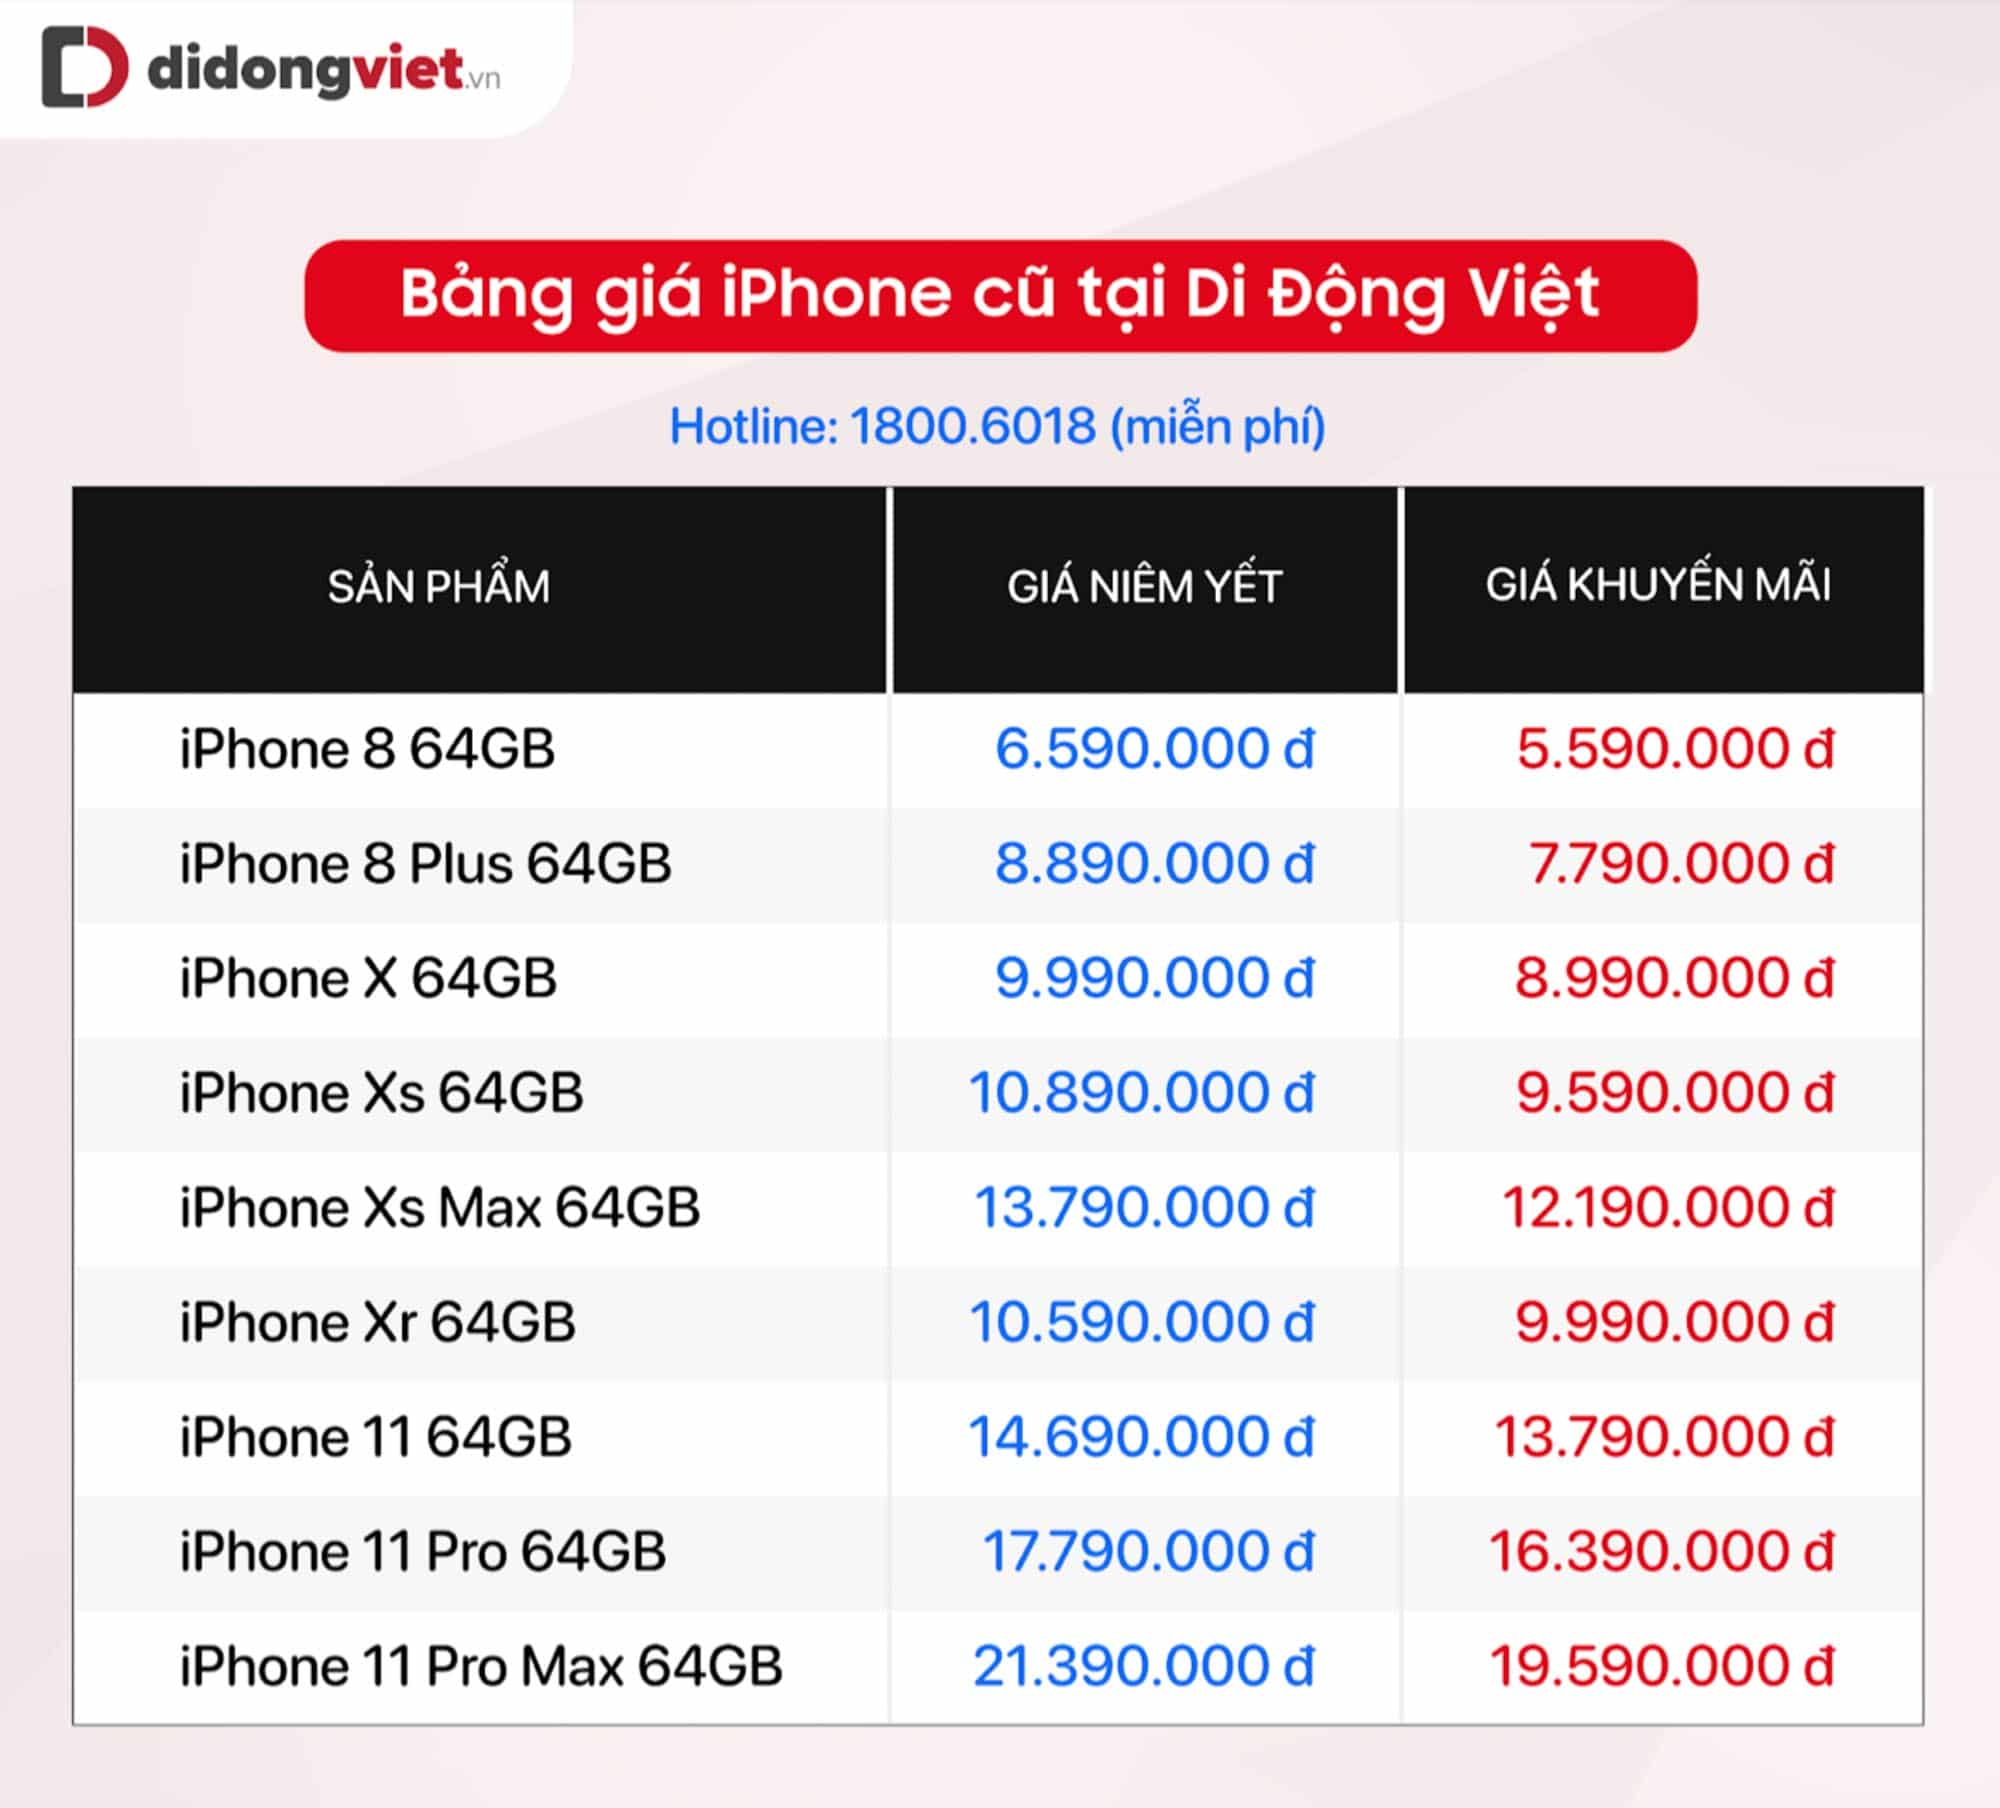 Bảng giá iPhone đầu tháng 3 - iPhone 12 giảm 7 triệu, iPhone Xs Max chỉ còn 12.19 triệu đồng